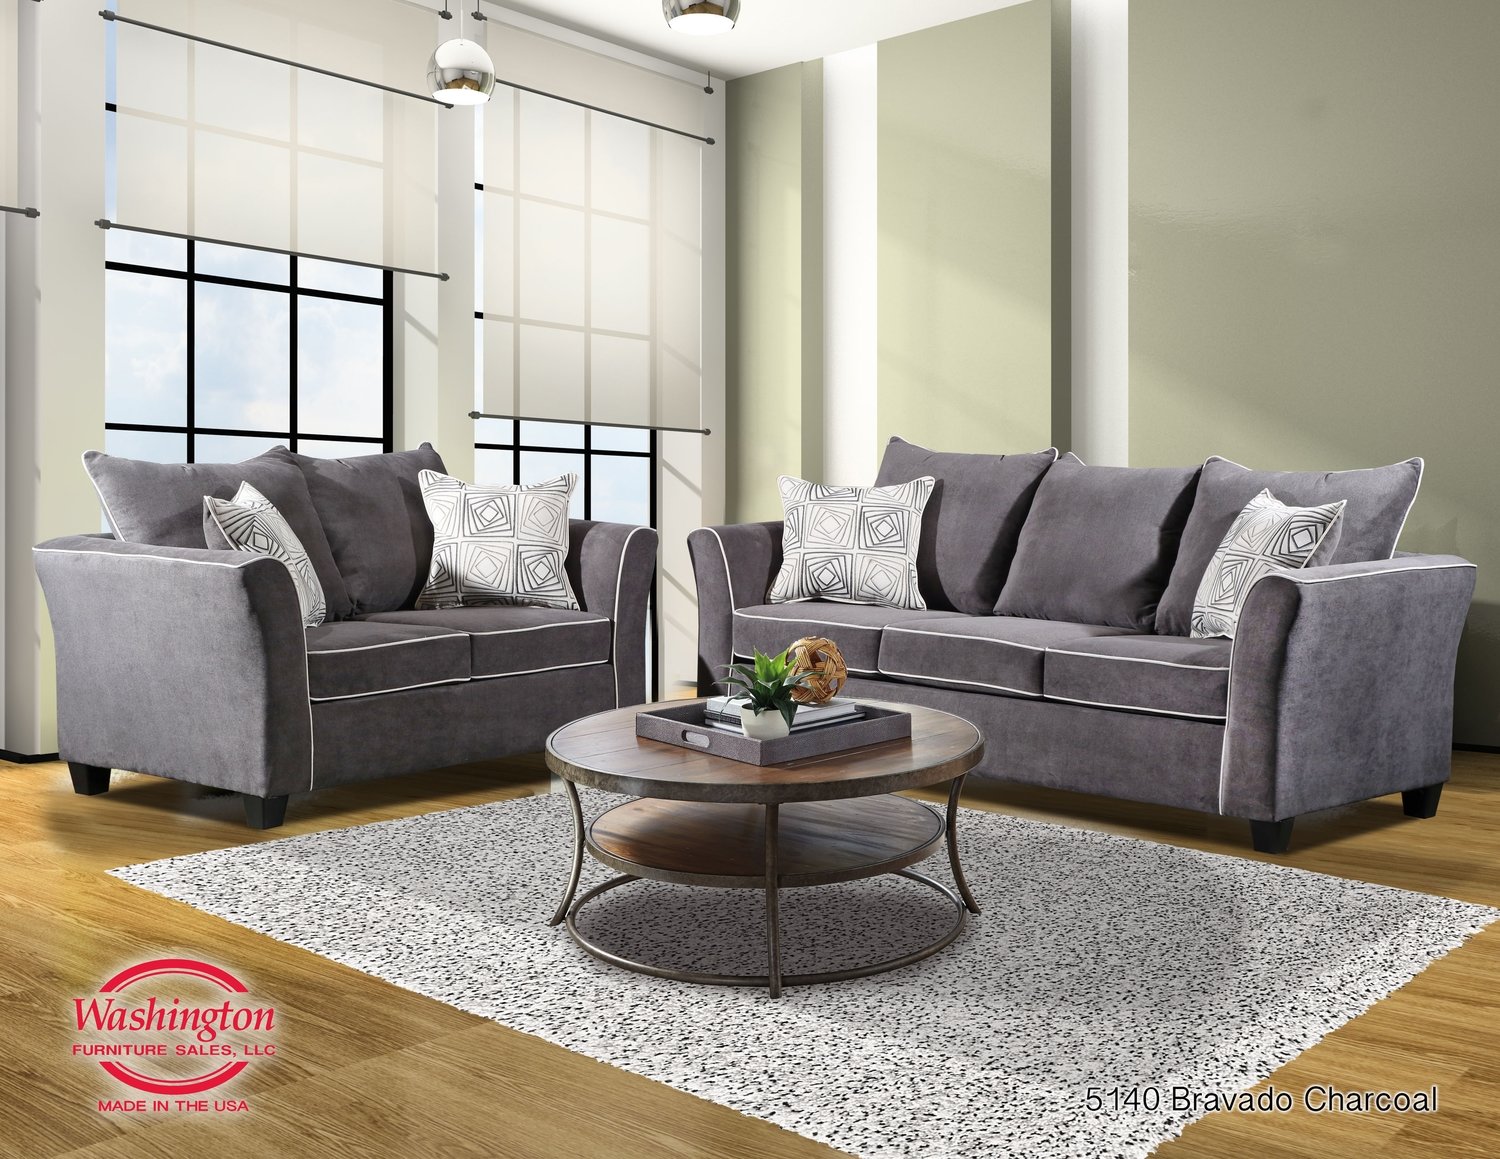 Bravado Charcoal Sofa And Love Seat Set 5140 130